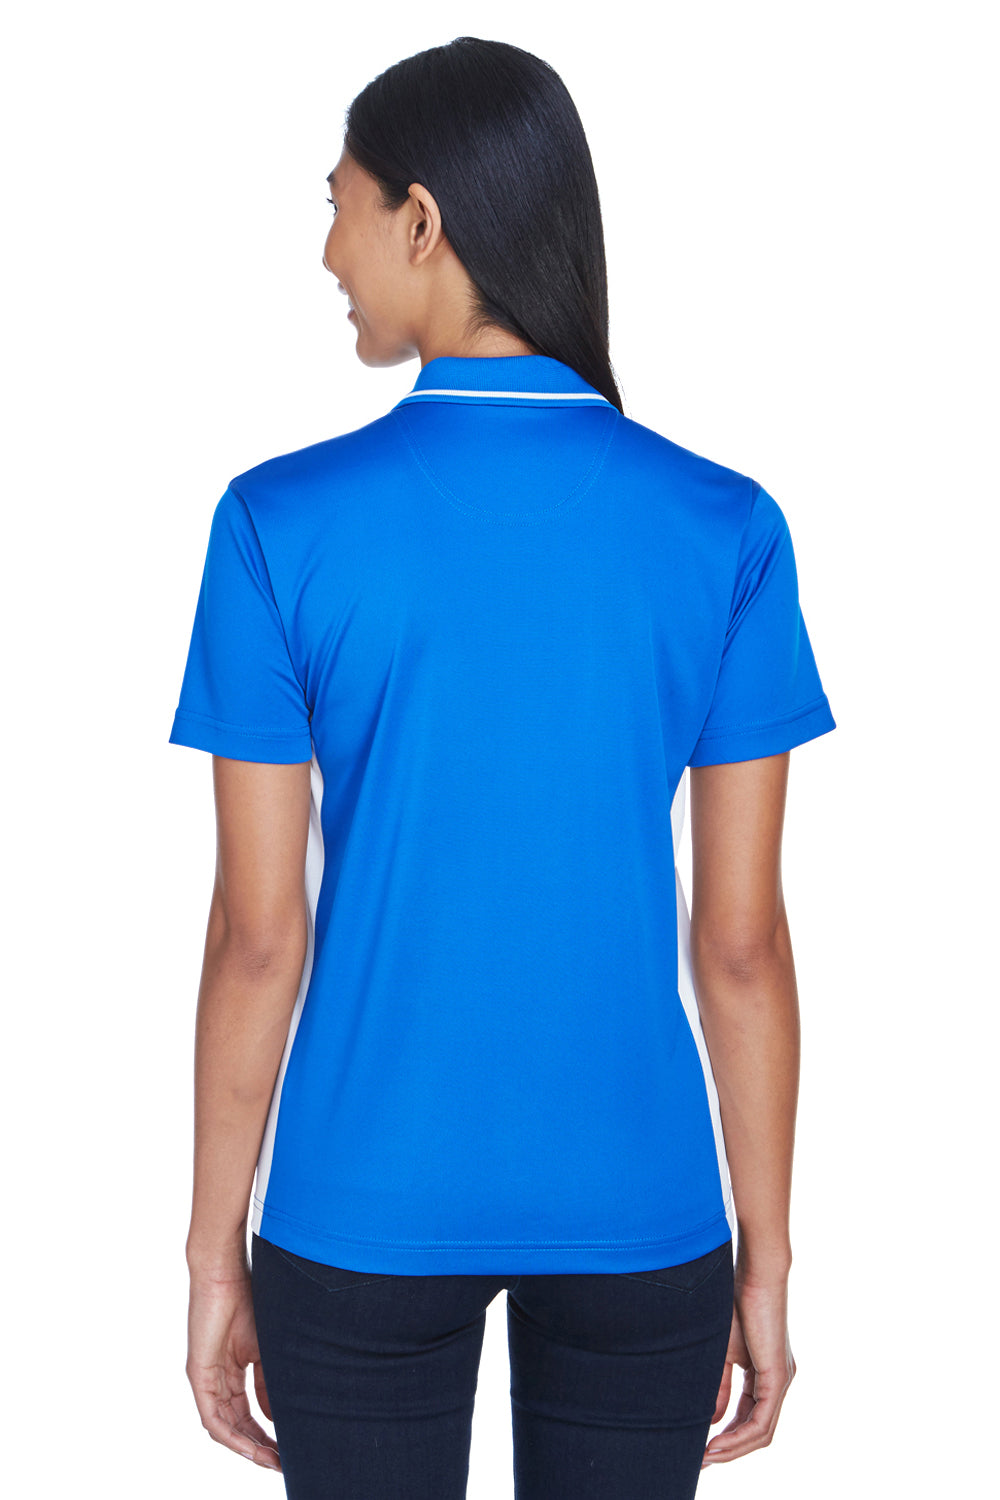 UltraClub 8406L Womens Cool & Dry Moisture Wicking Short Sleeve Polo Shirt Royal Blue/White Back